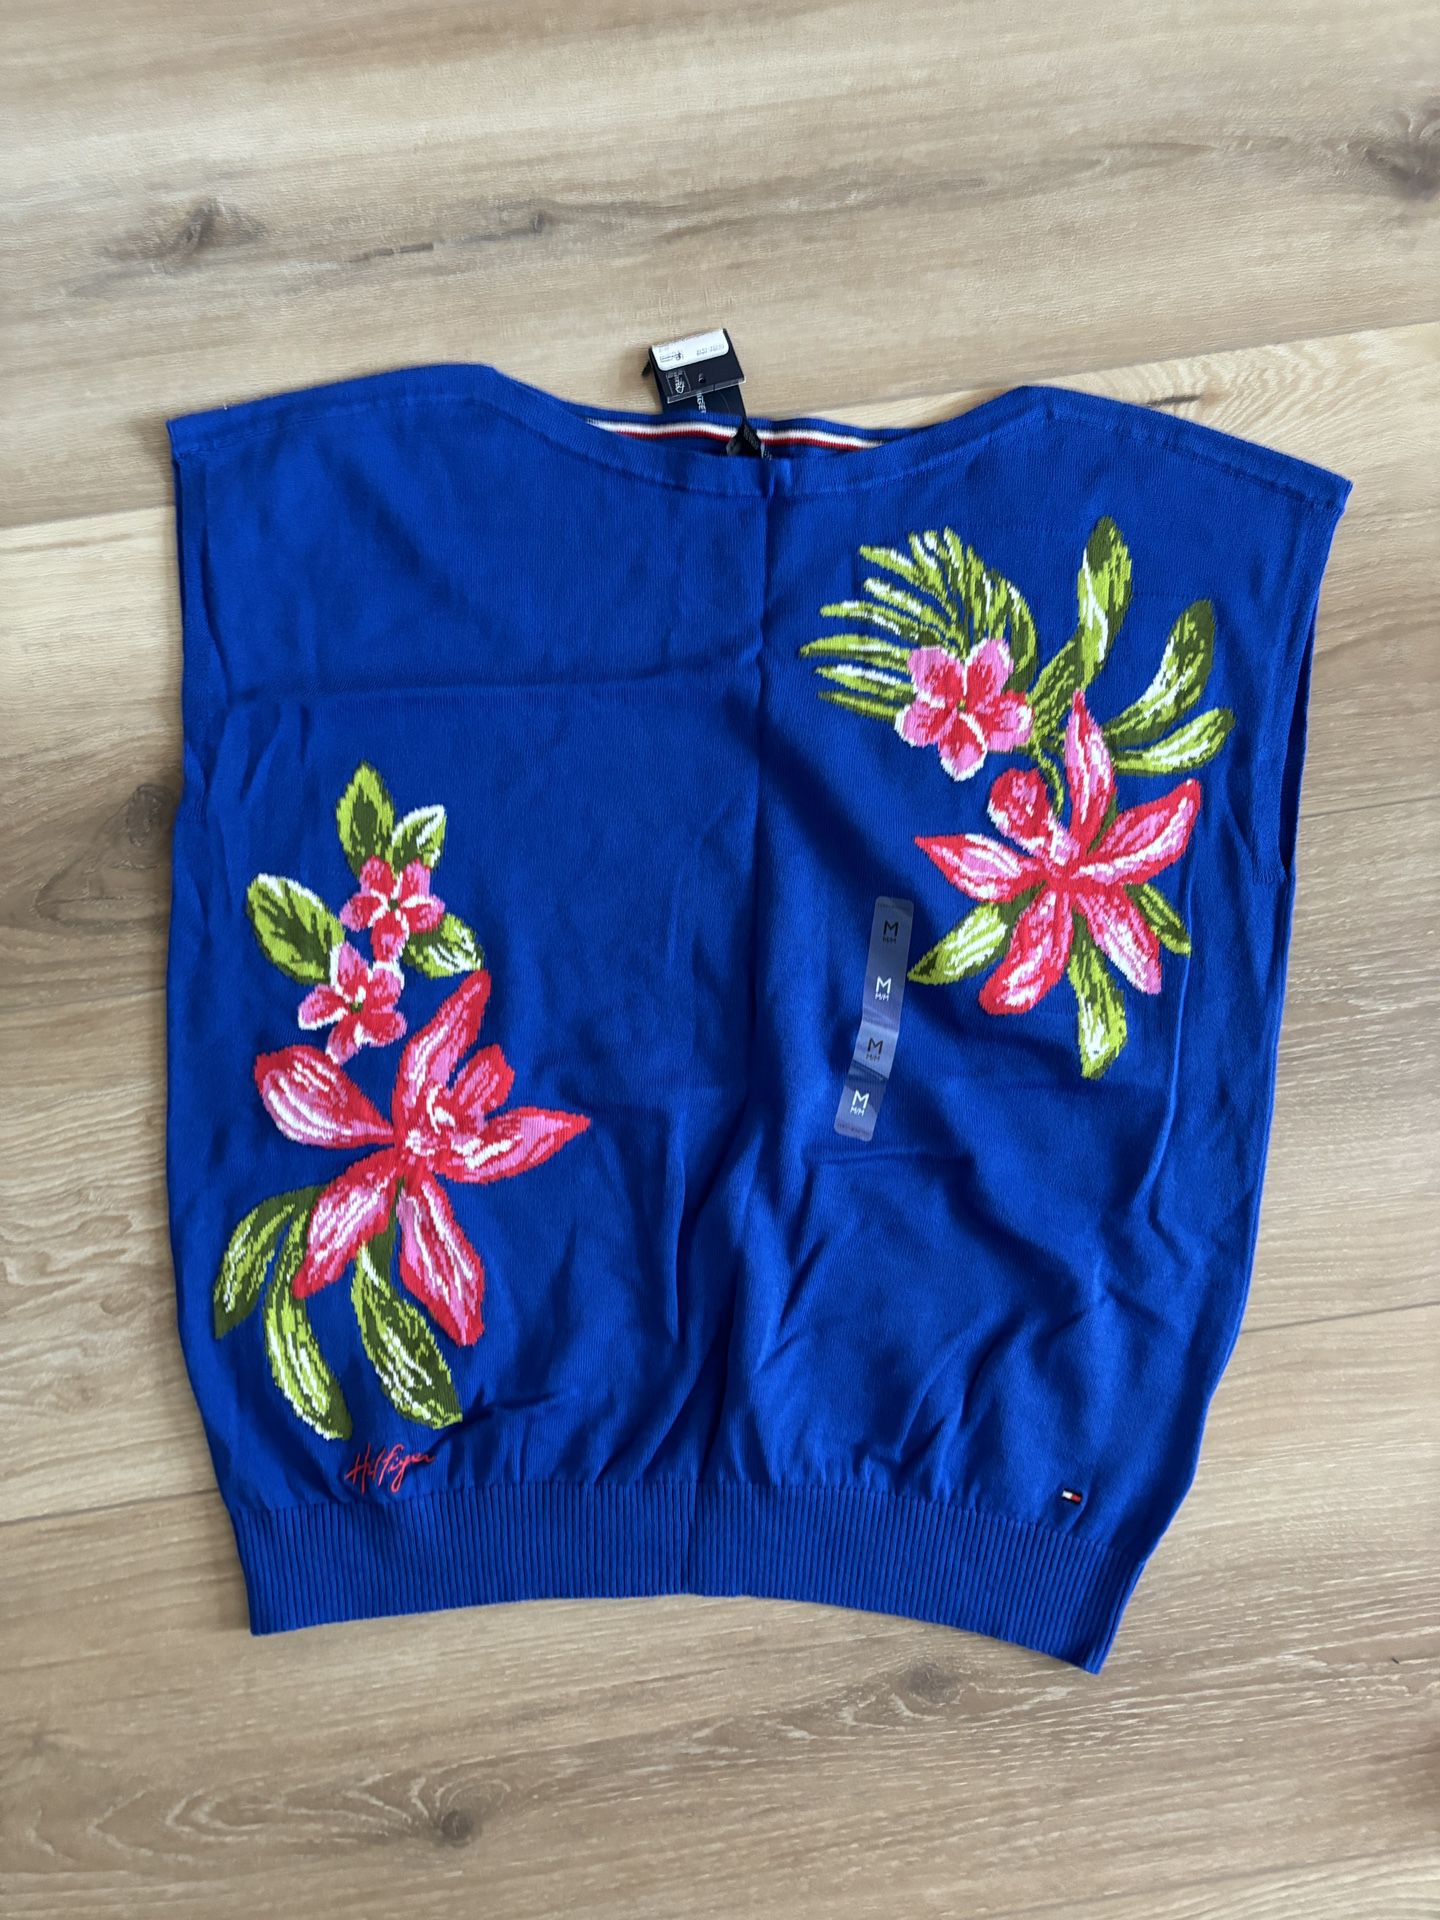 TOMMY HILFIGER  Blue Boat Neck Floral Pattern Sweater Top Size Medium